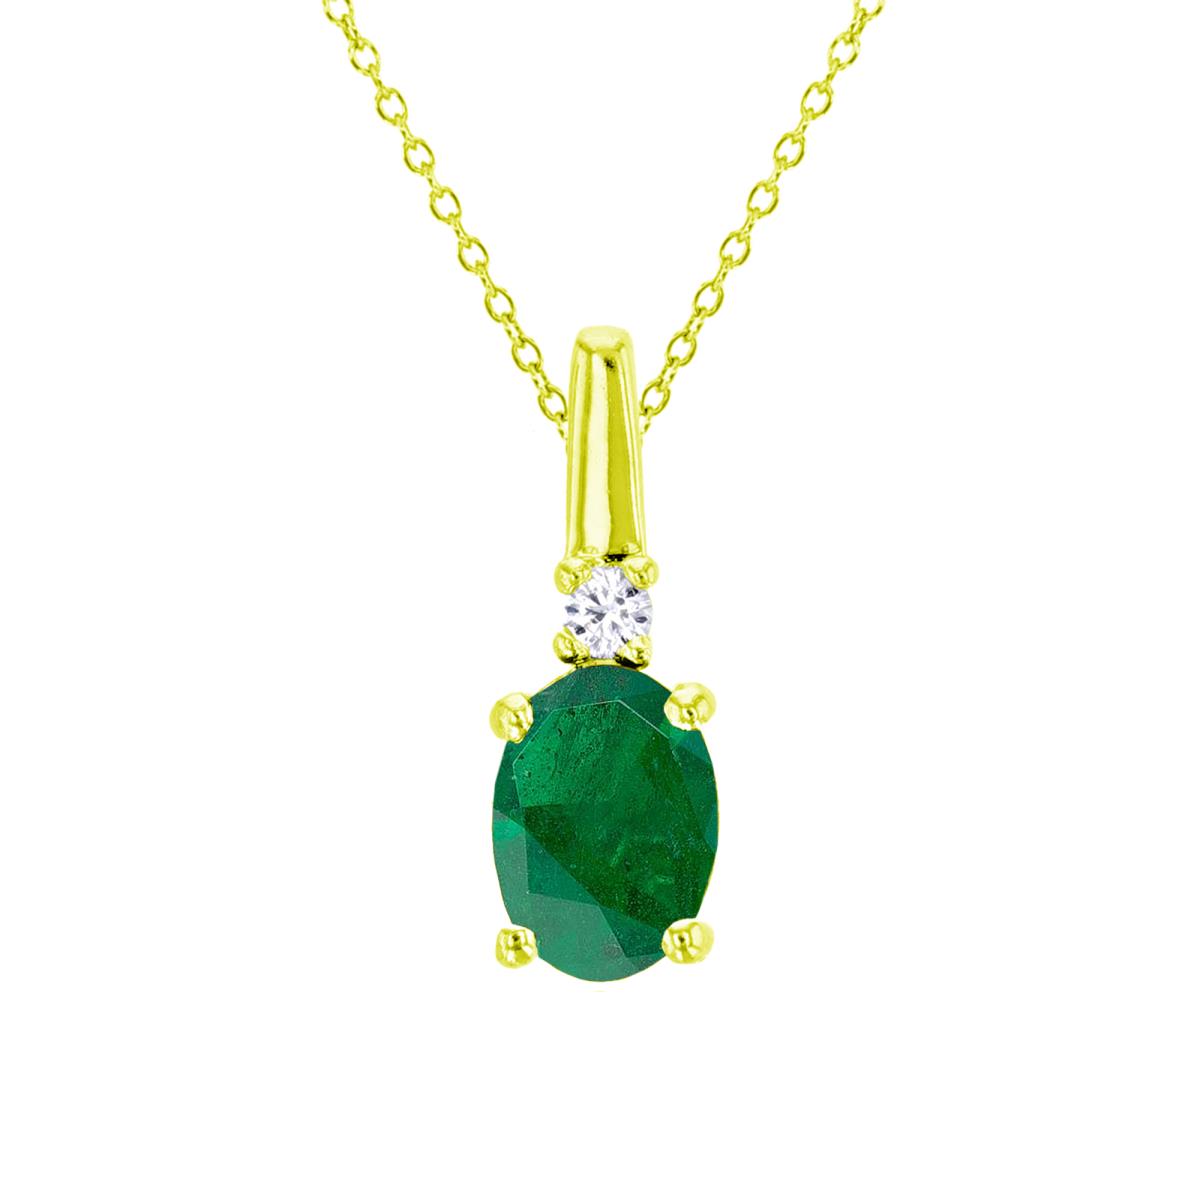 10K Yellow Gold 0.01cttw Rnd Diamonds & 7x5mm Ov Emerald 18"Necklace